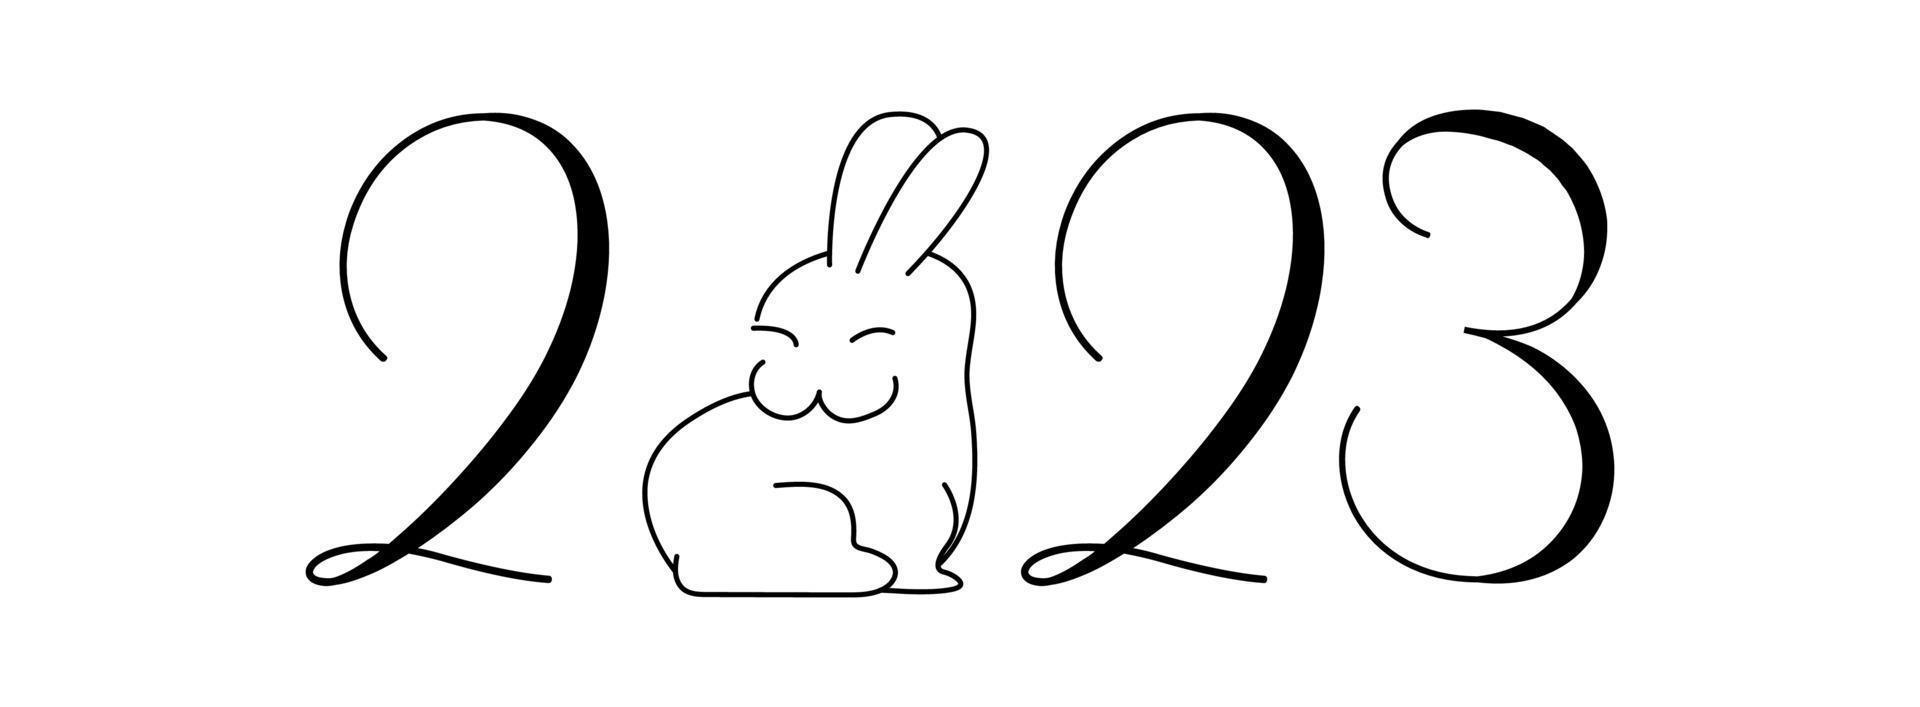 Lycklig ny år.kanin horoskop tecken.kinesiska horoskop kanin med 2023. vektor